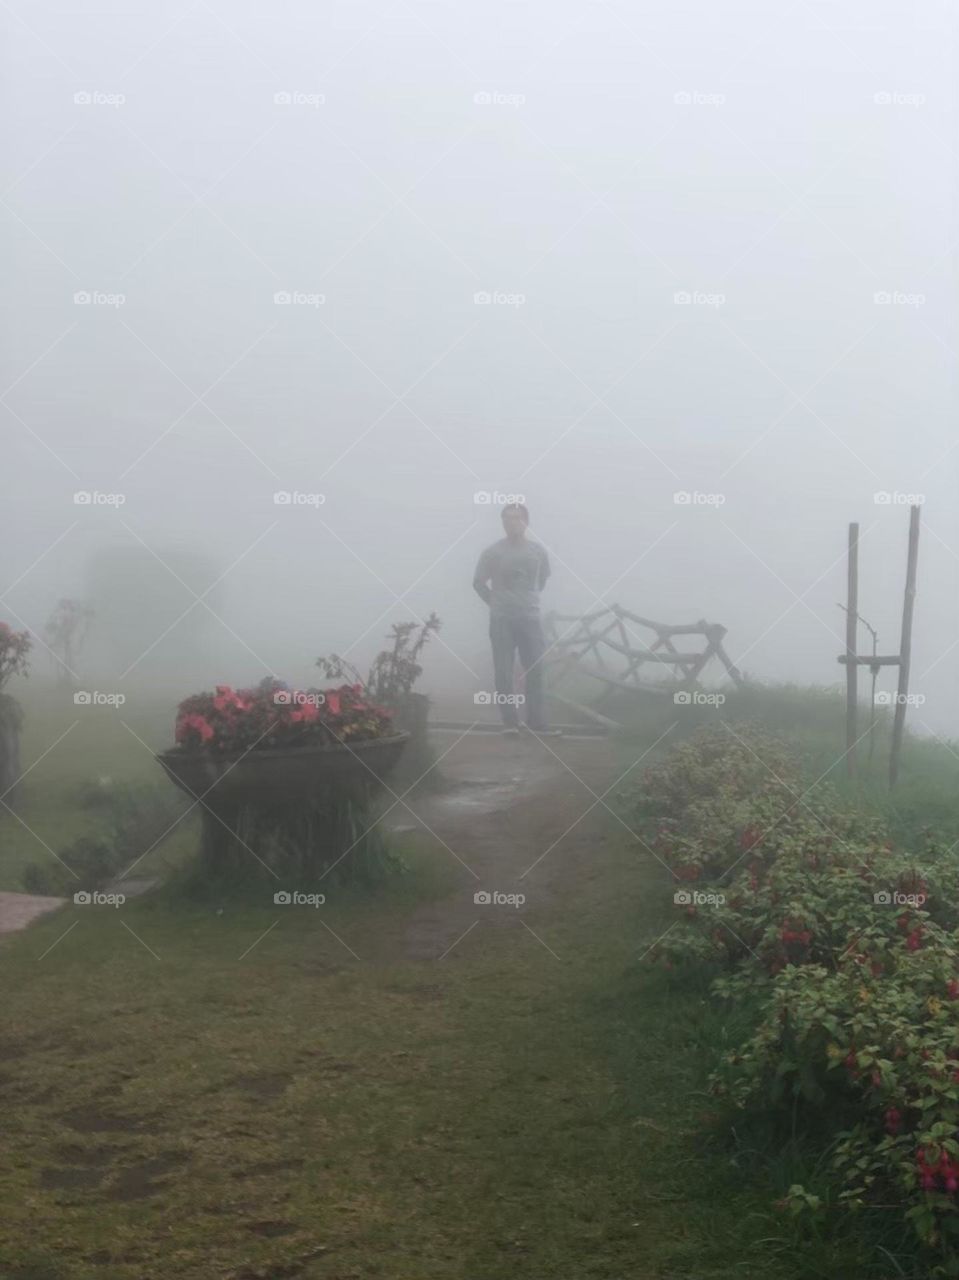 A man in the fog